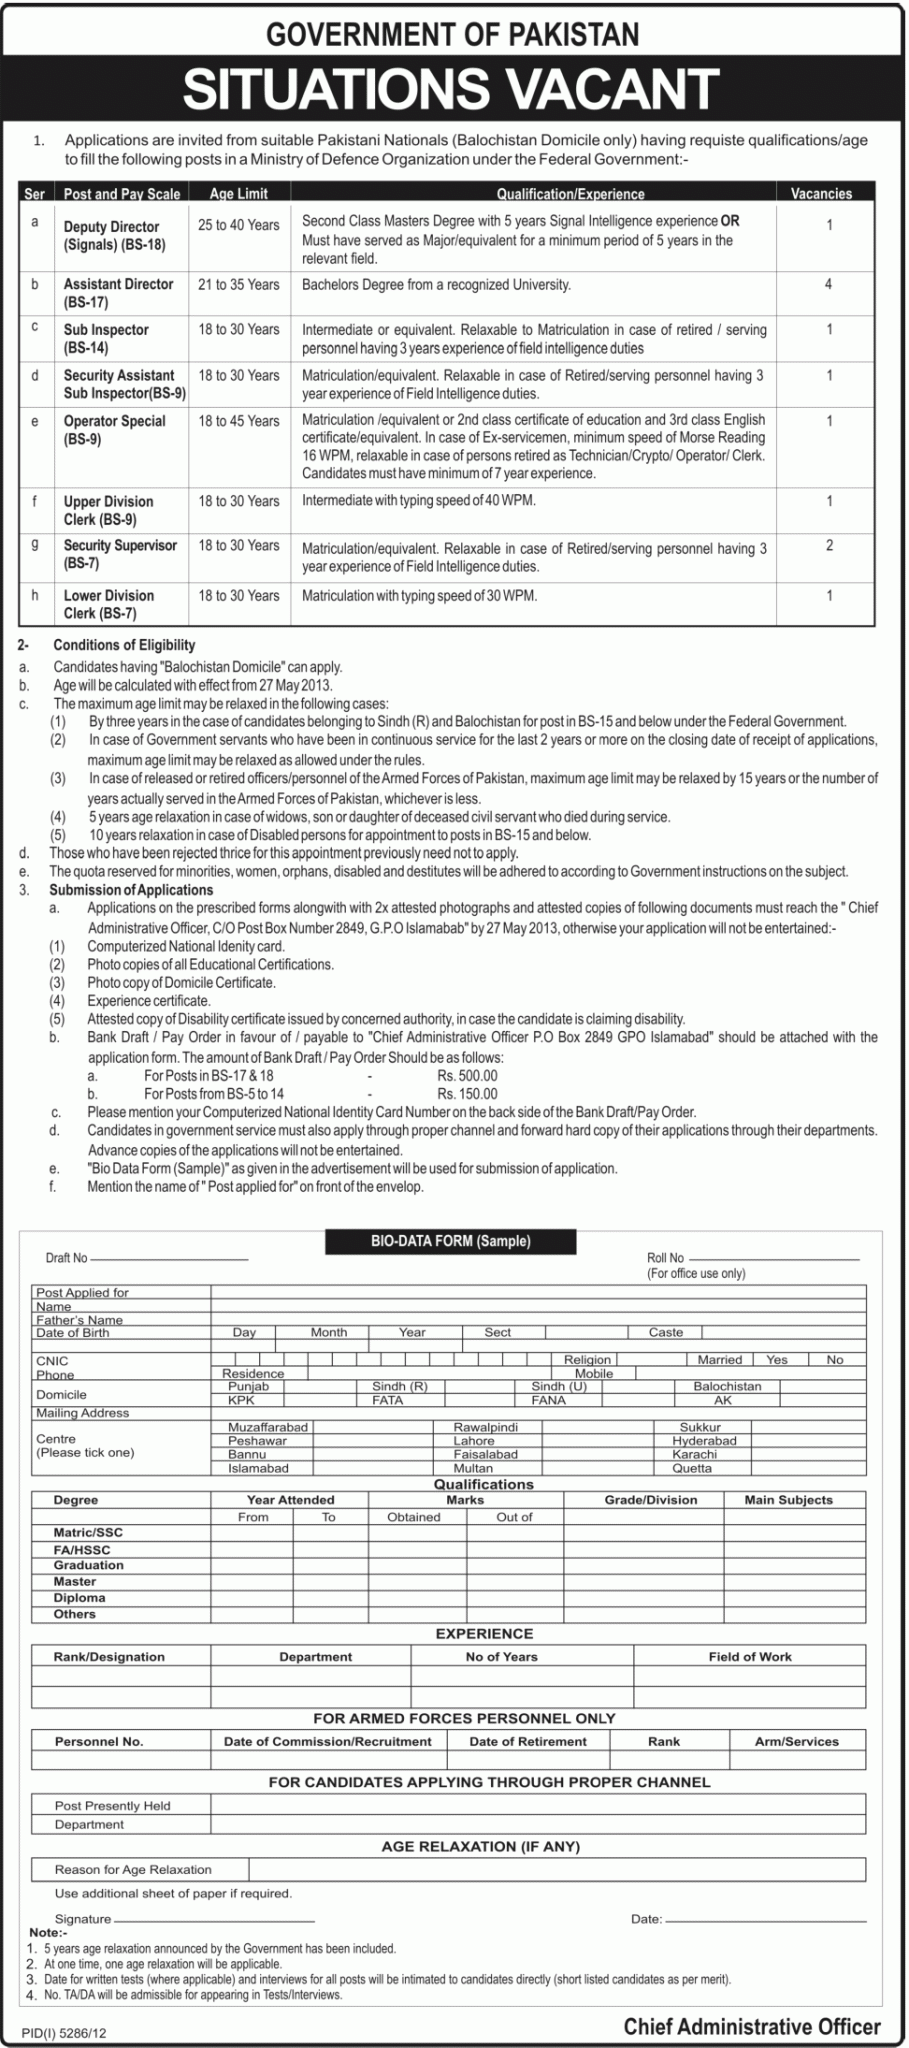 Jobs for Deputy Director, Assistant Director & Sub Inspector in Govt. of Pakistan